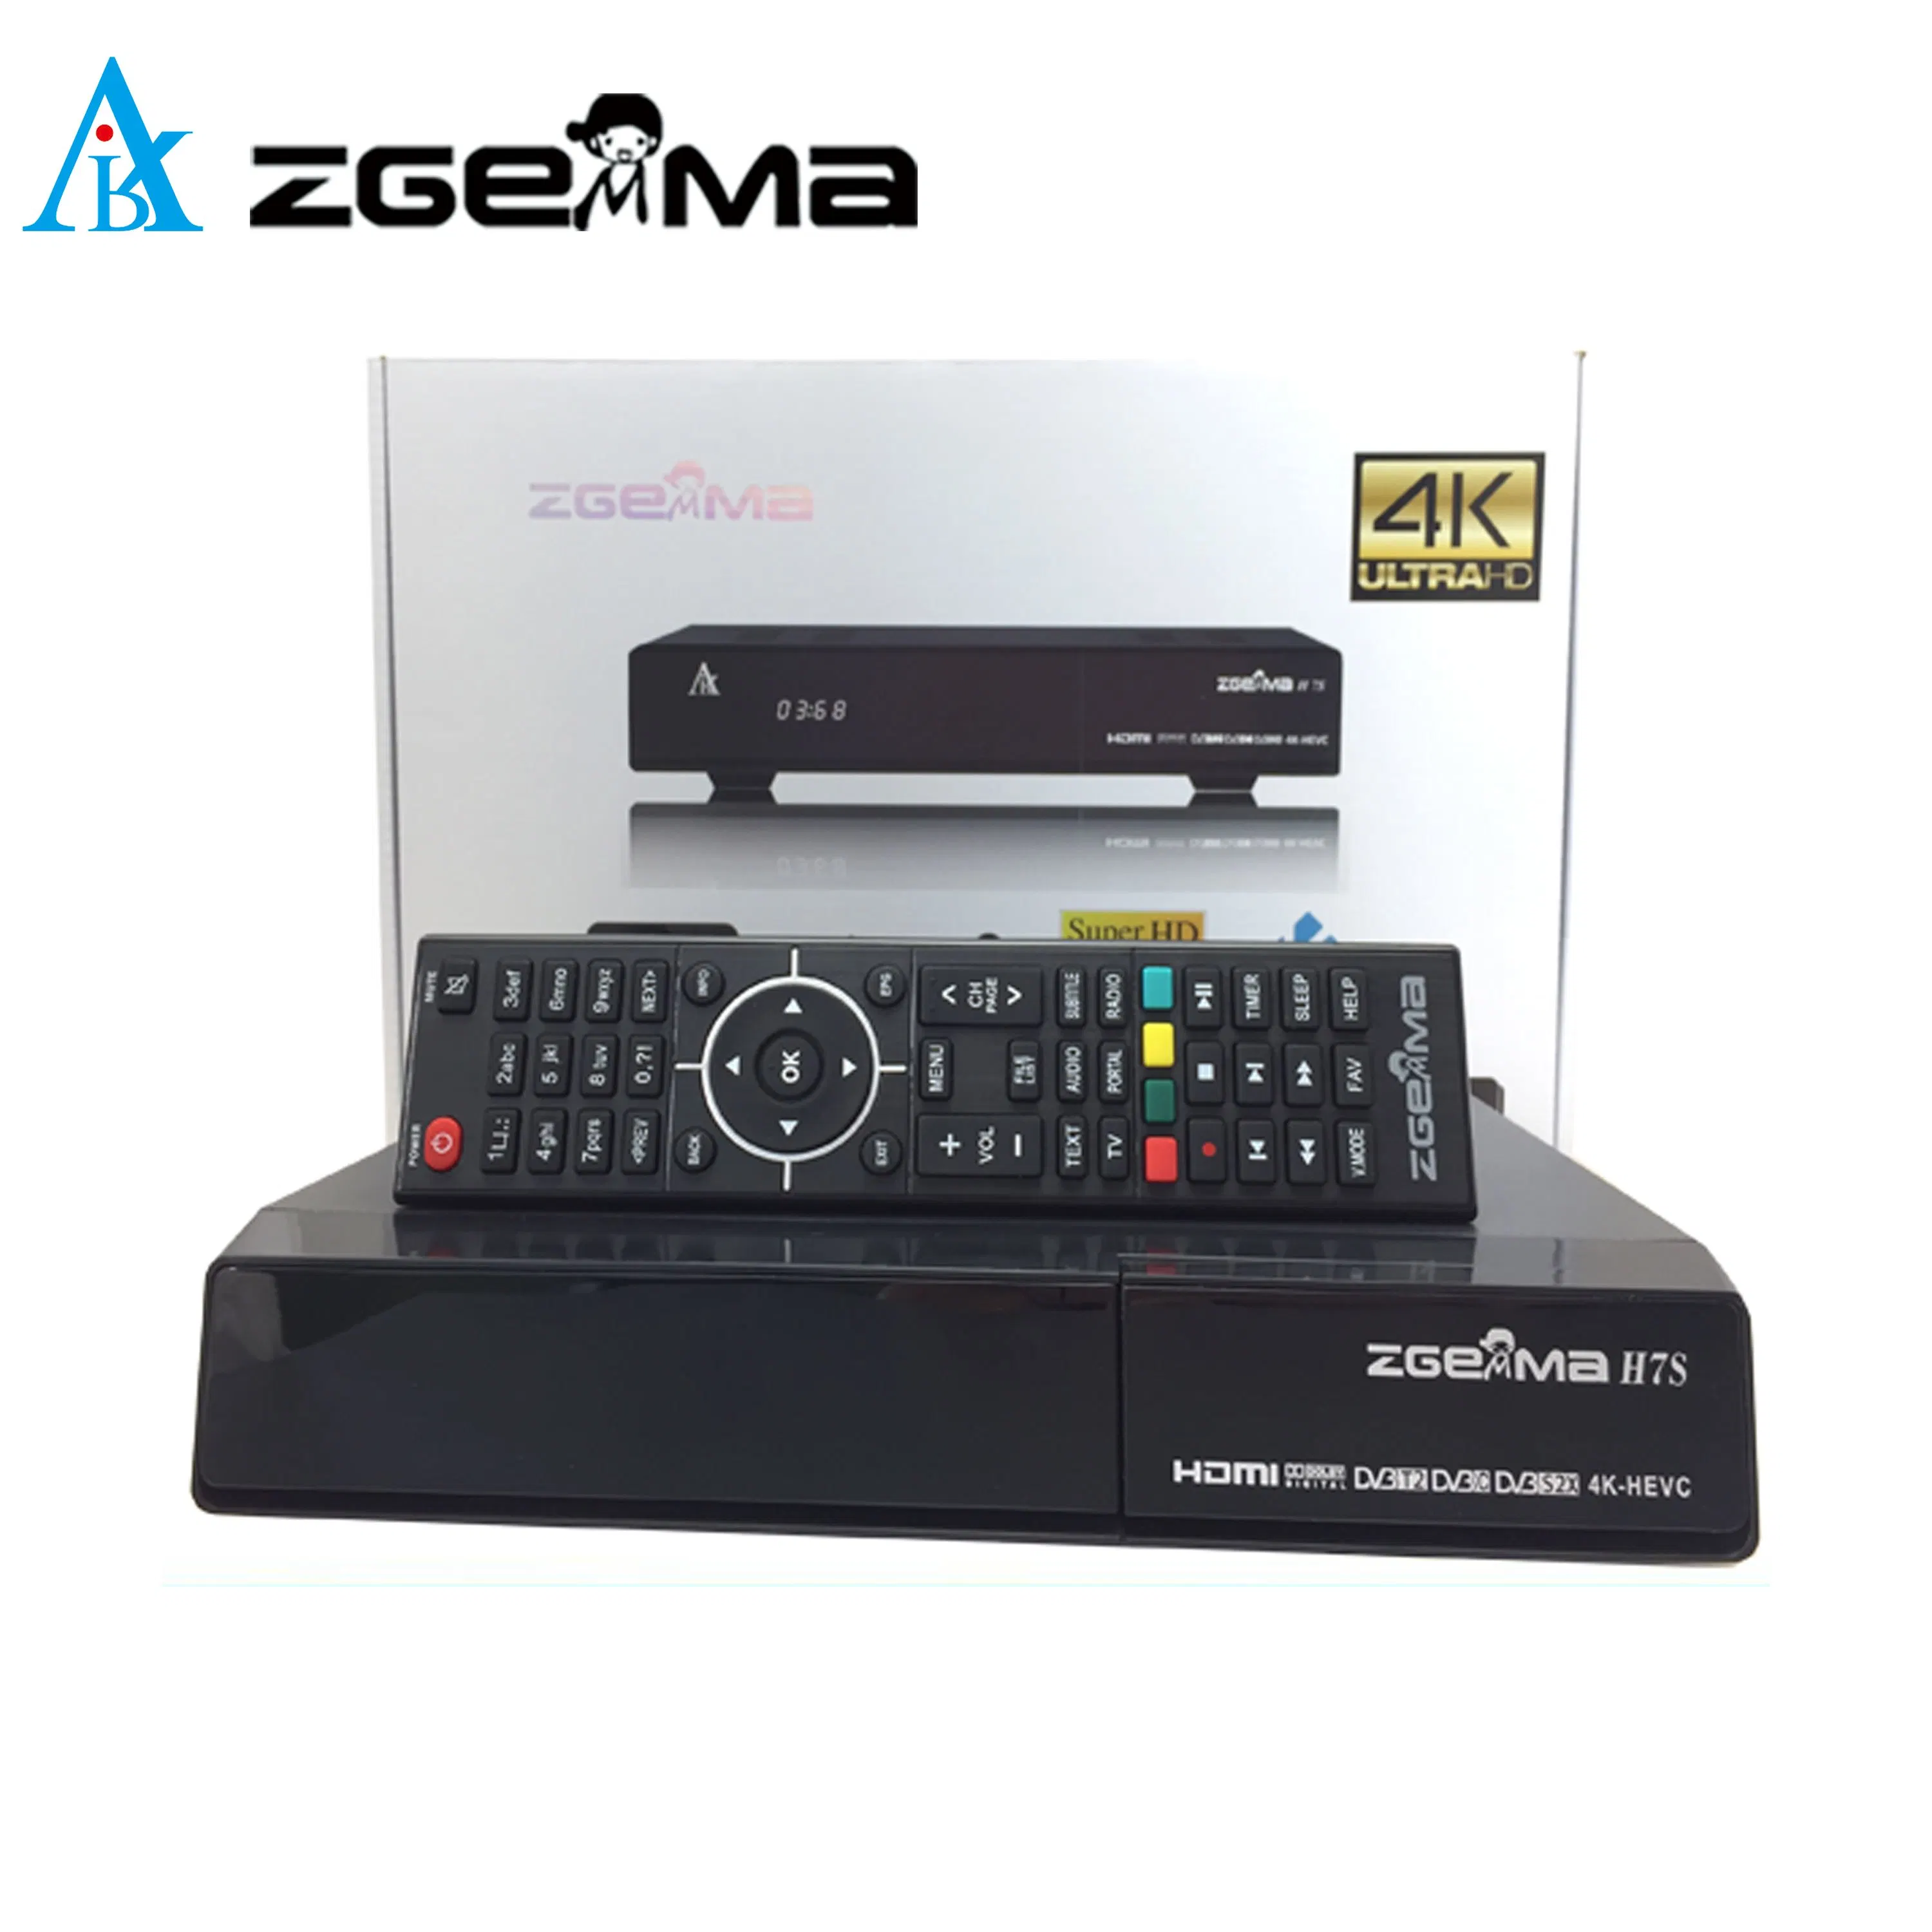 DVB-S2X + DVB-T2/C Combo Tuner Built-in IPTV and Ci Ca 4K Satellite TV Receiver Zgemma H7s